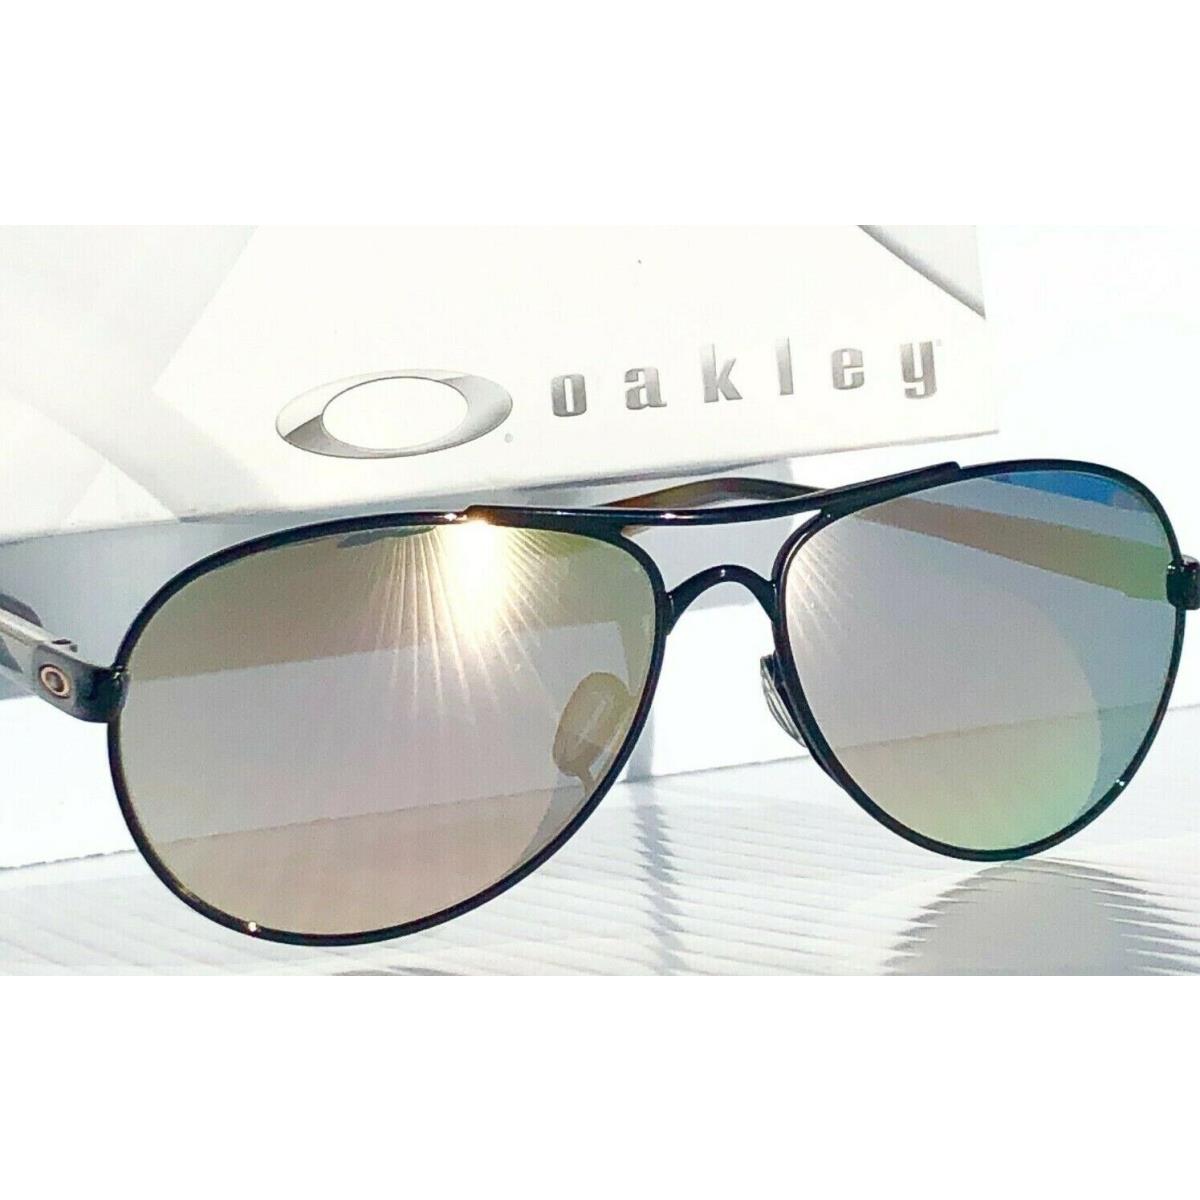 Oakley sunglasses Tie Breaker - Pink , Multicolor Frame, Pink Lens 9